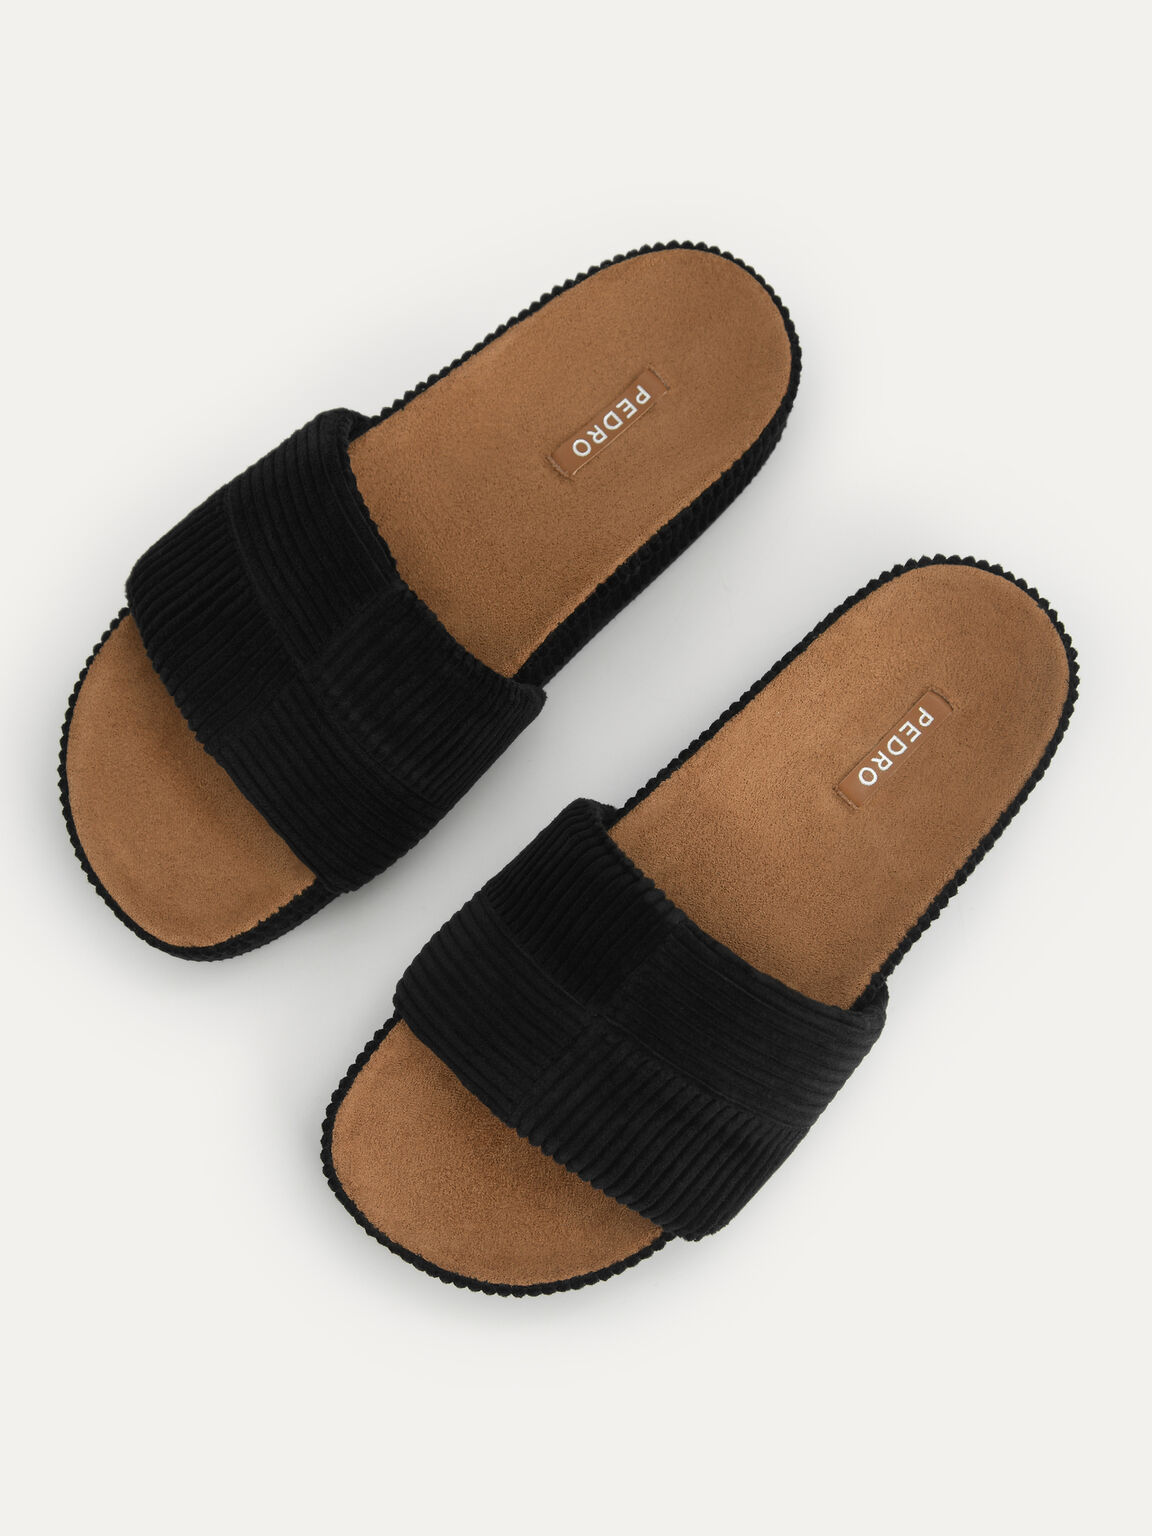 Corduroy Flatform Sandals, Black